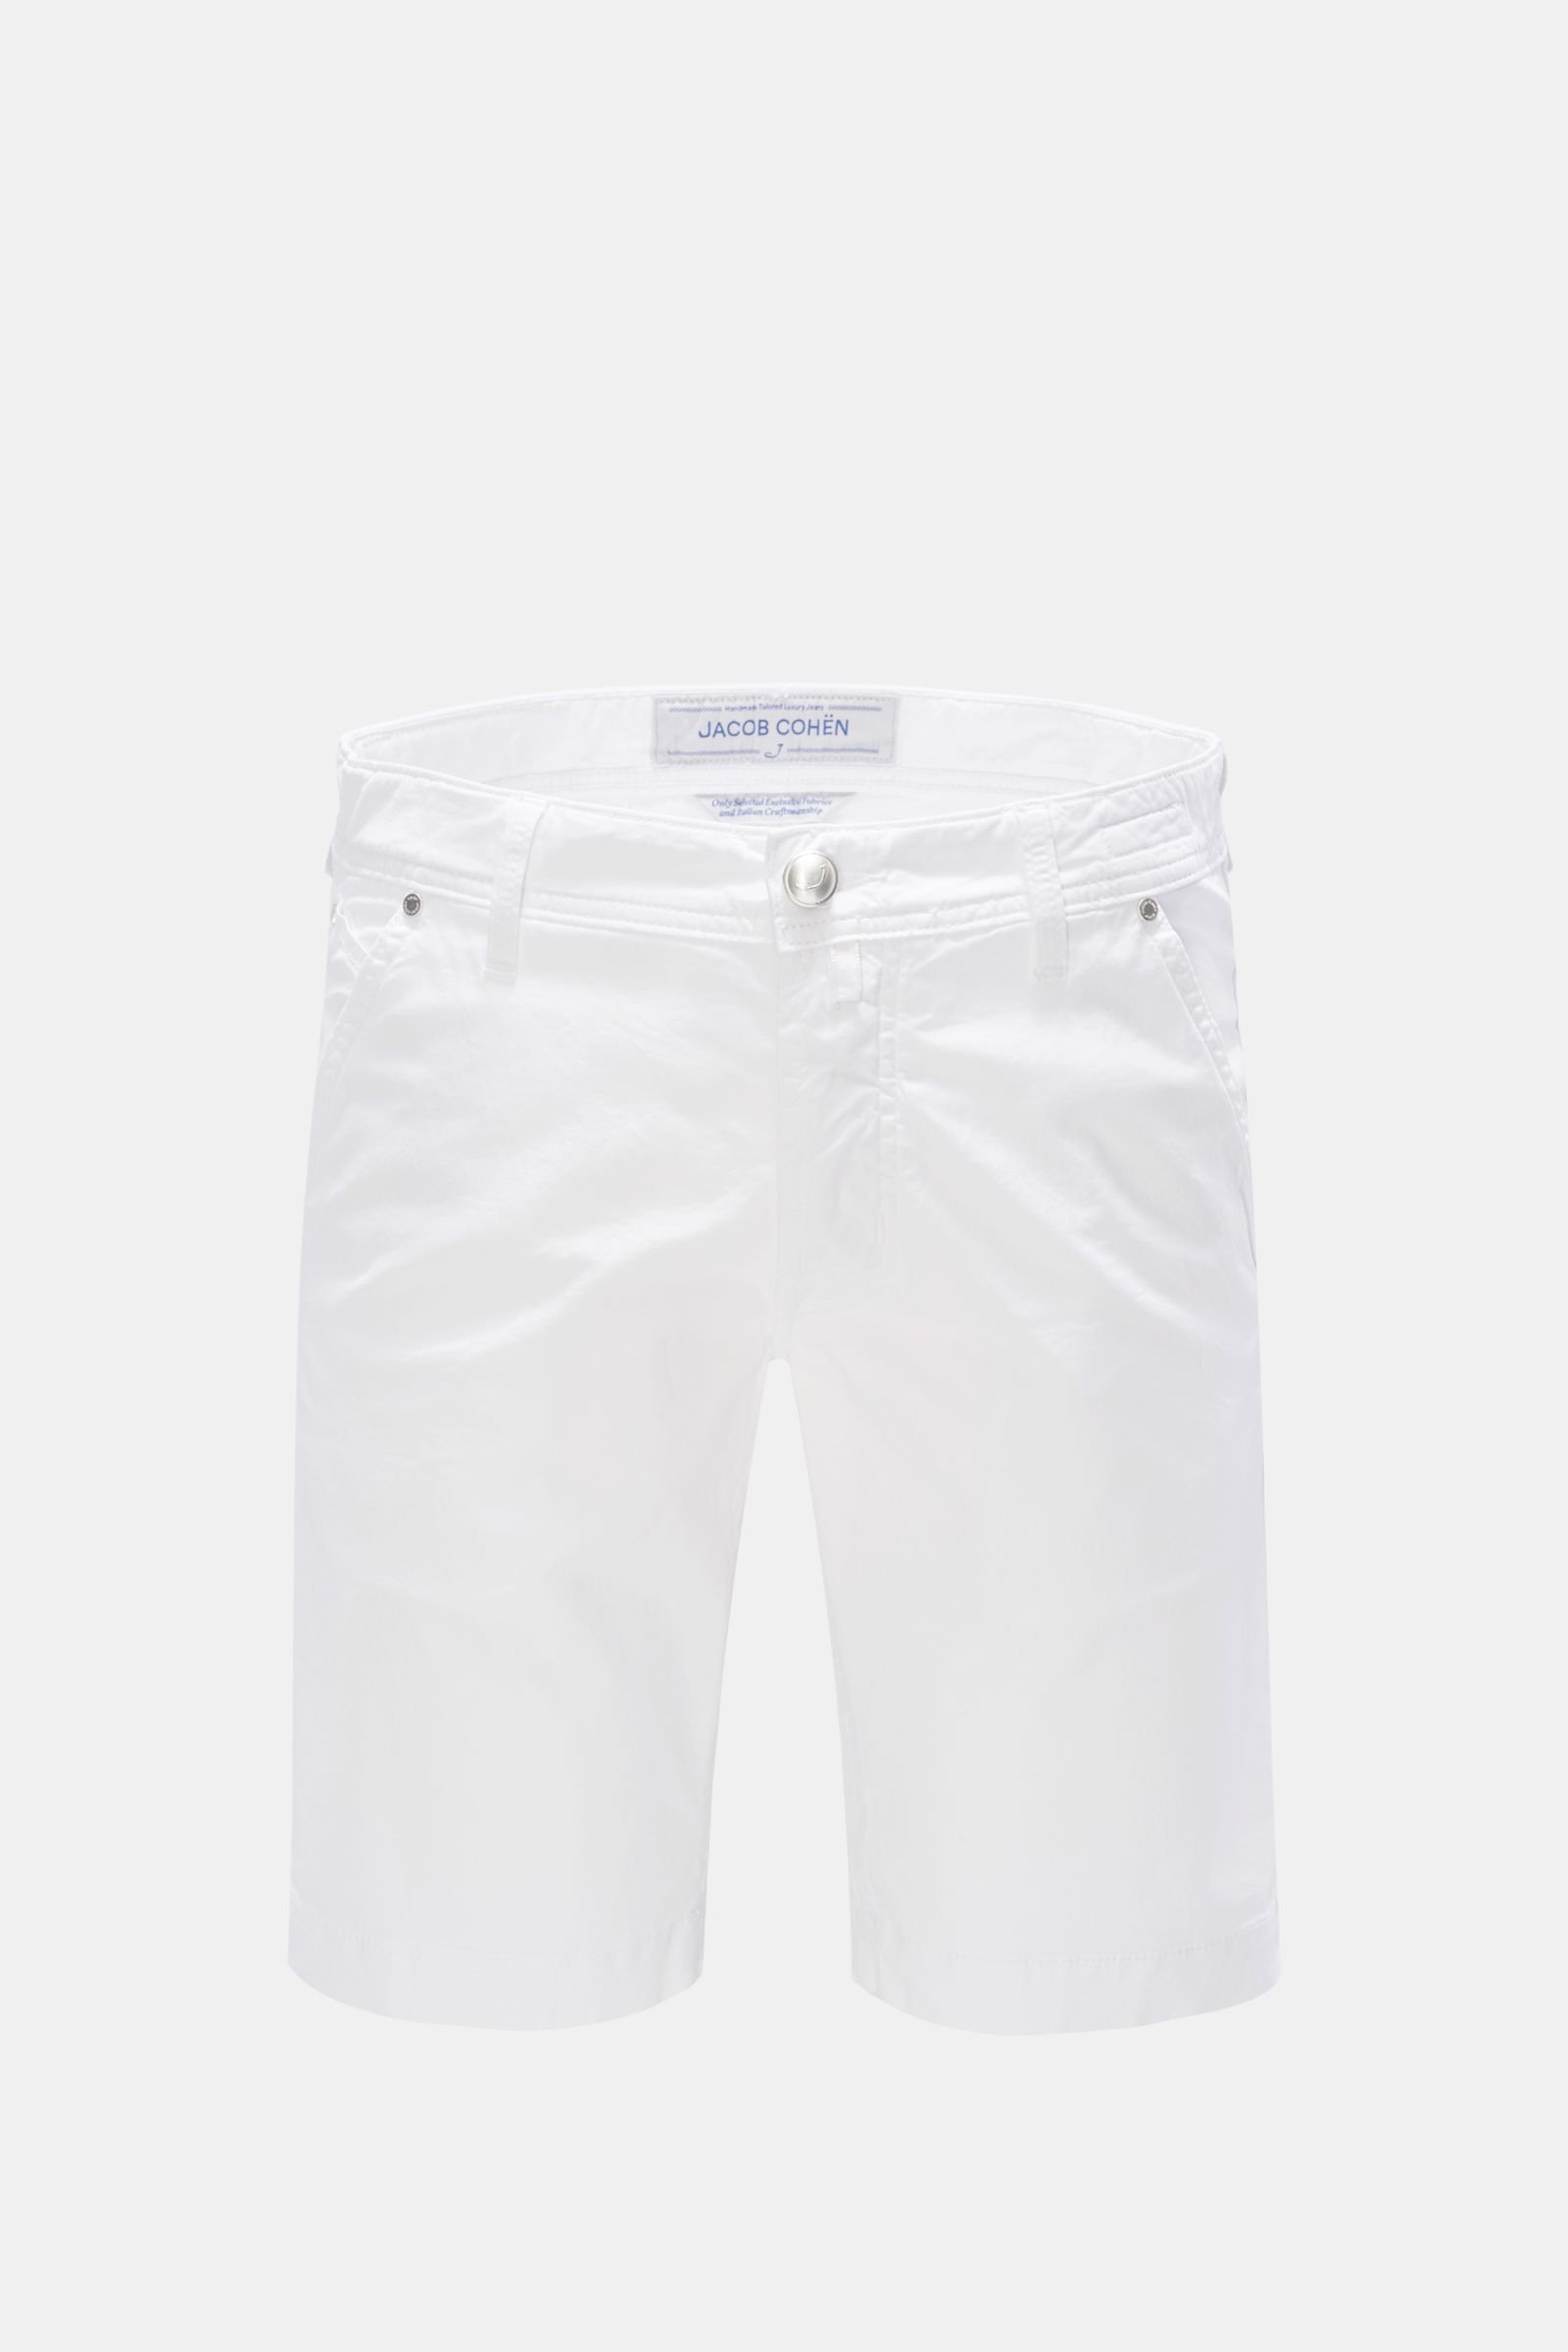 Bermuda shorts 'J6613 Comfort Slim Fit' white